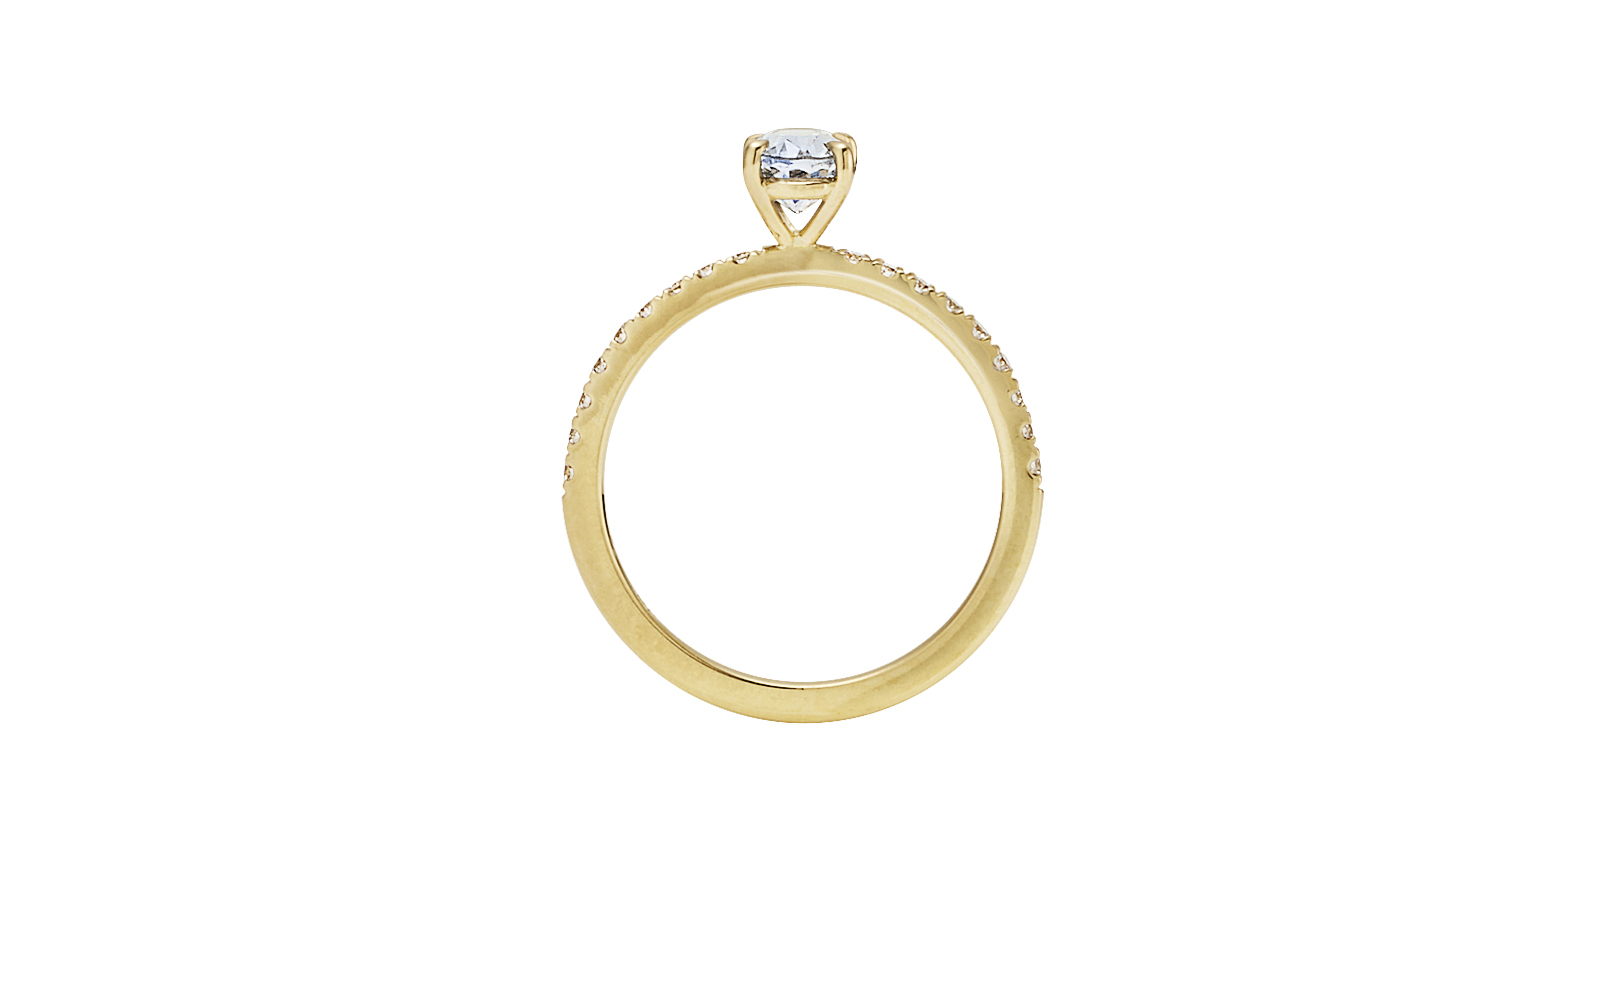 Moonrise Ring Oval Ice Blue Ceylon Sapphire and Diamonds 18k Yellow Gold